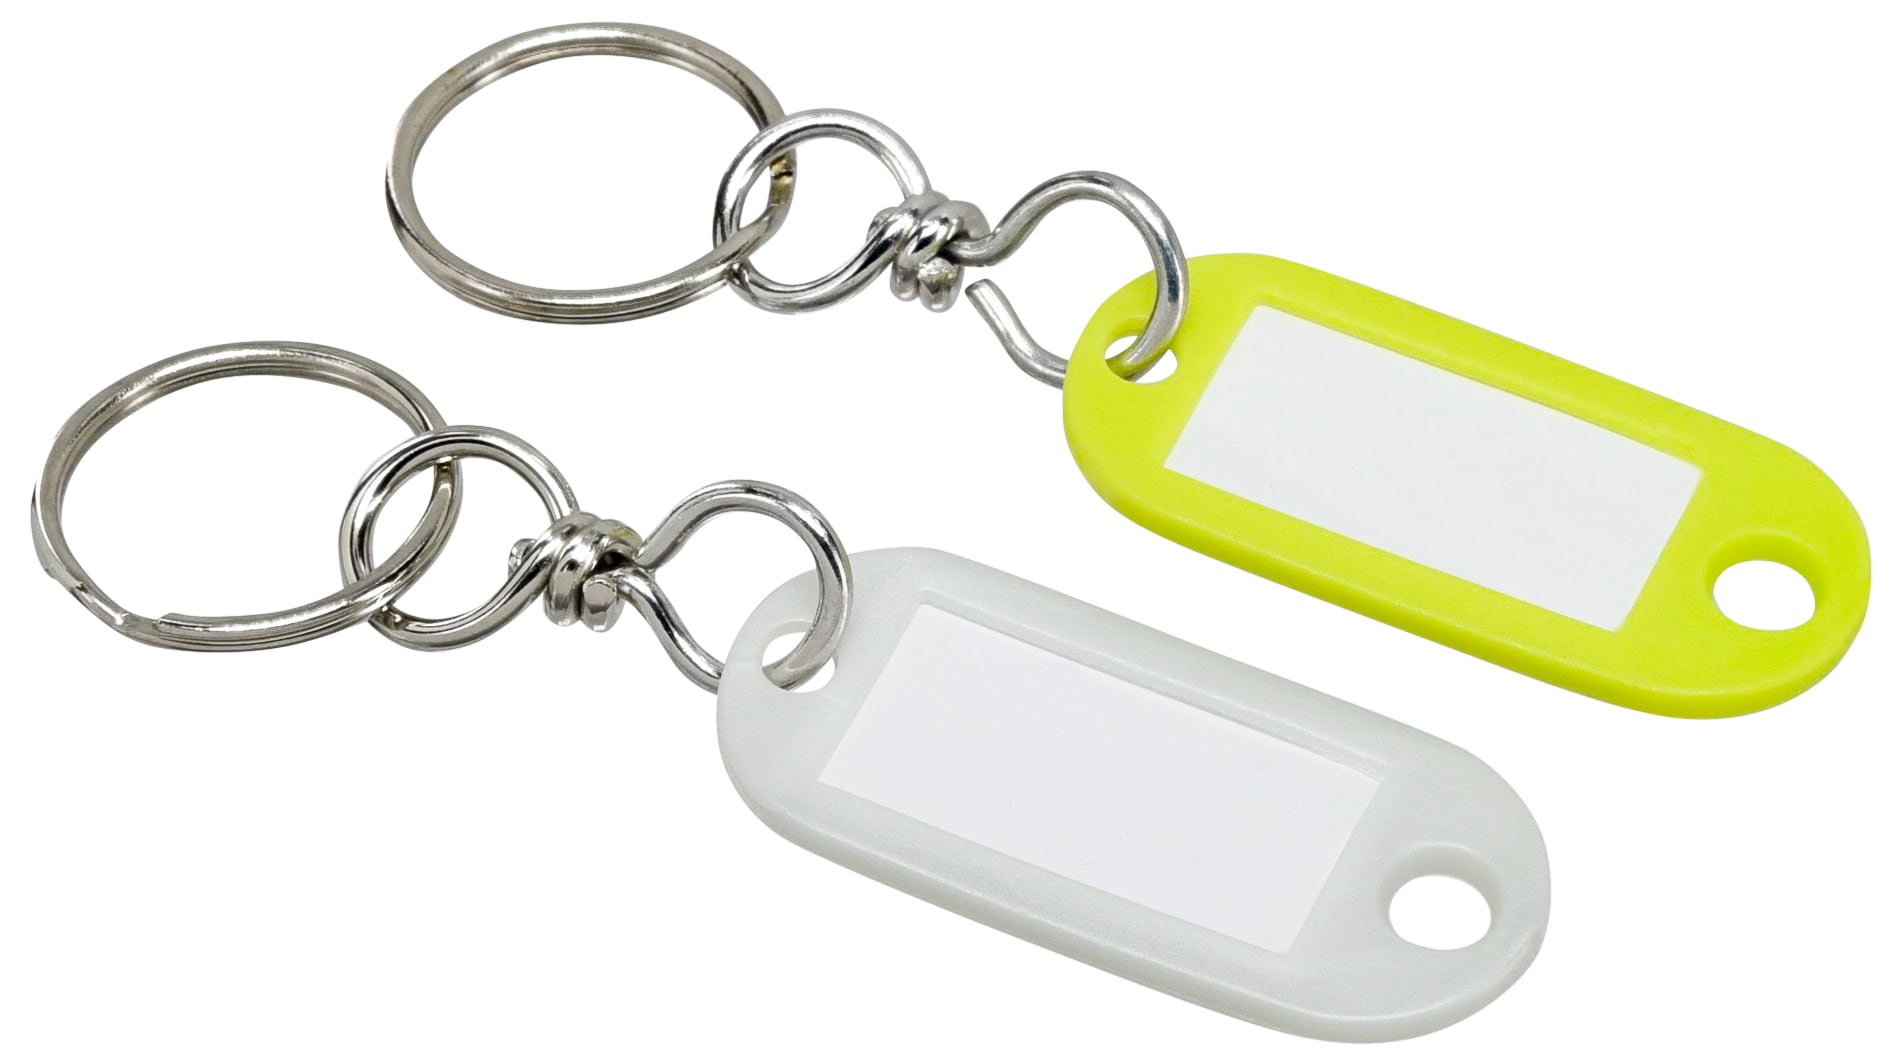 Sasylvia 60 Pcs Key Tags Identifiers Flexible Key Tags 12 Colors Colorful Key  Ring Tags Waterproof Writable Key Labels for Keys Luggage Small Items -  Yahoo Shopping